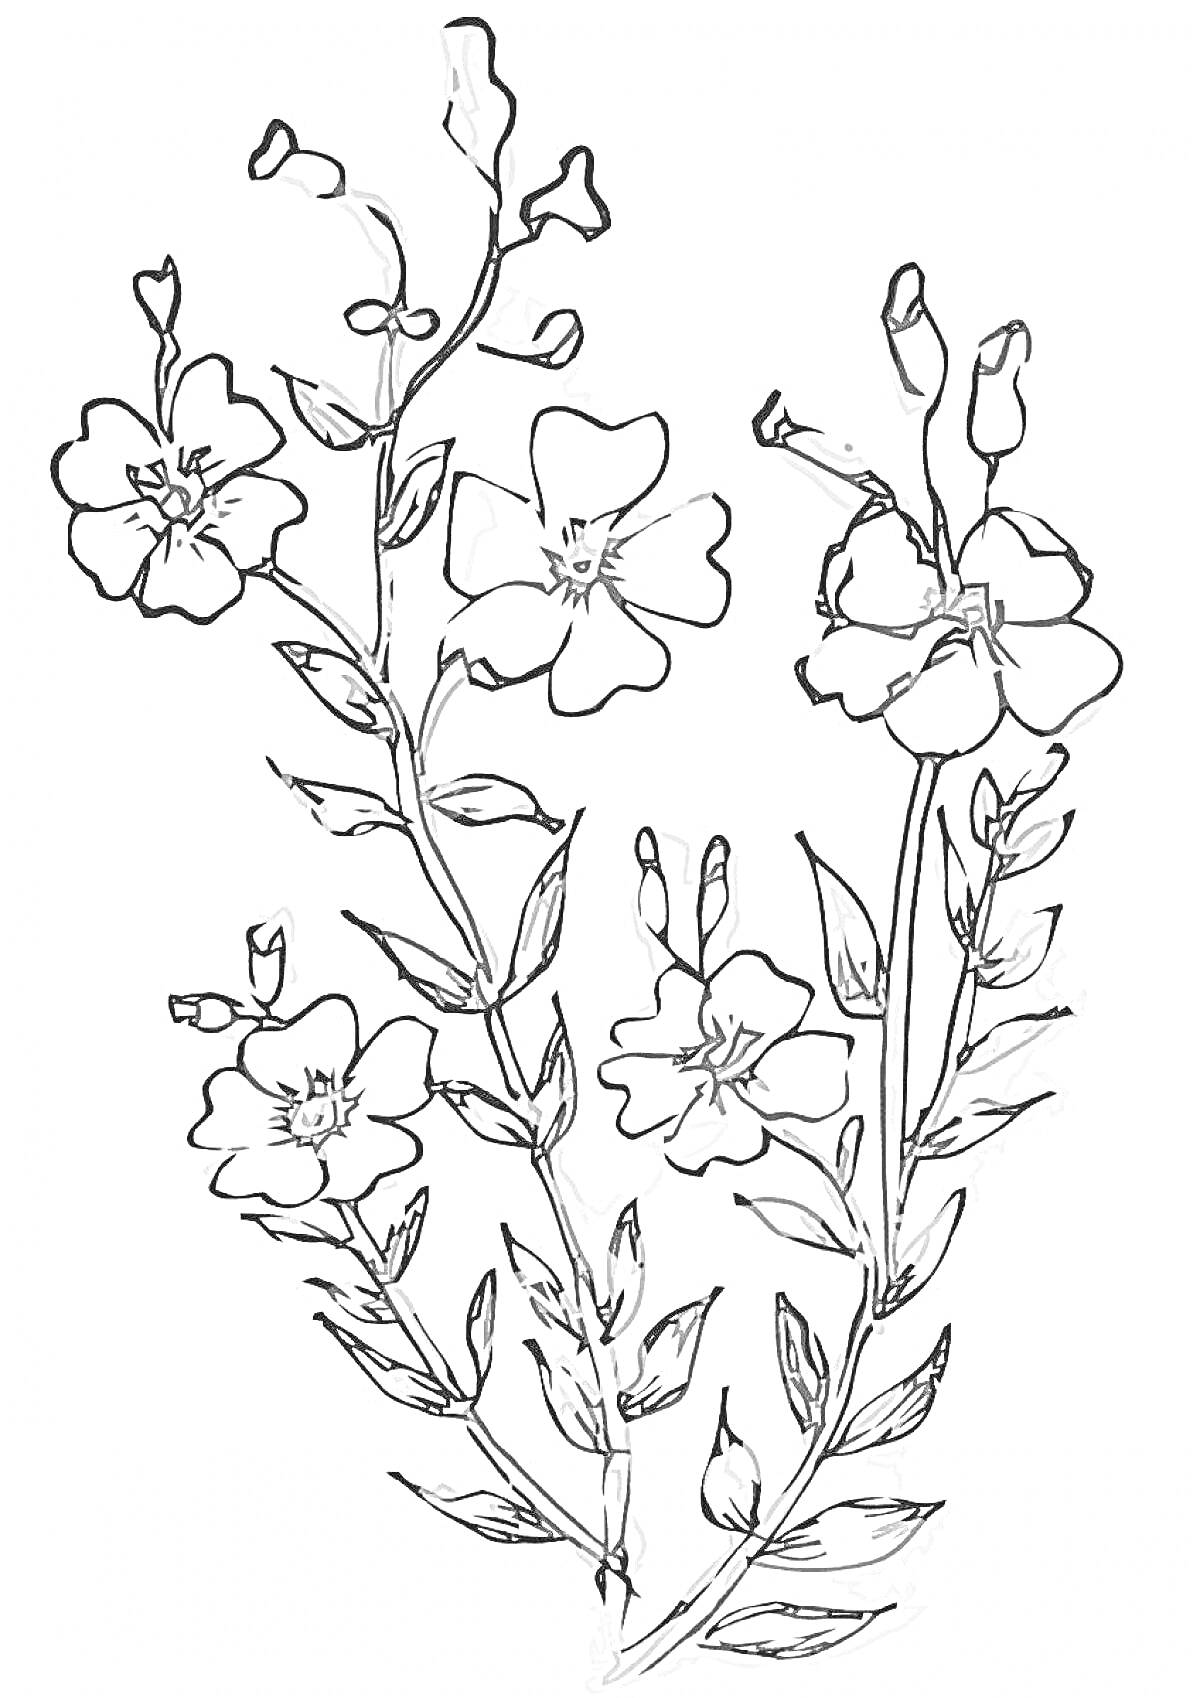 Рисунок с цветущими стеблями льна